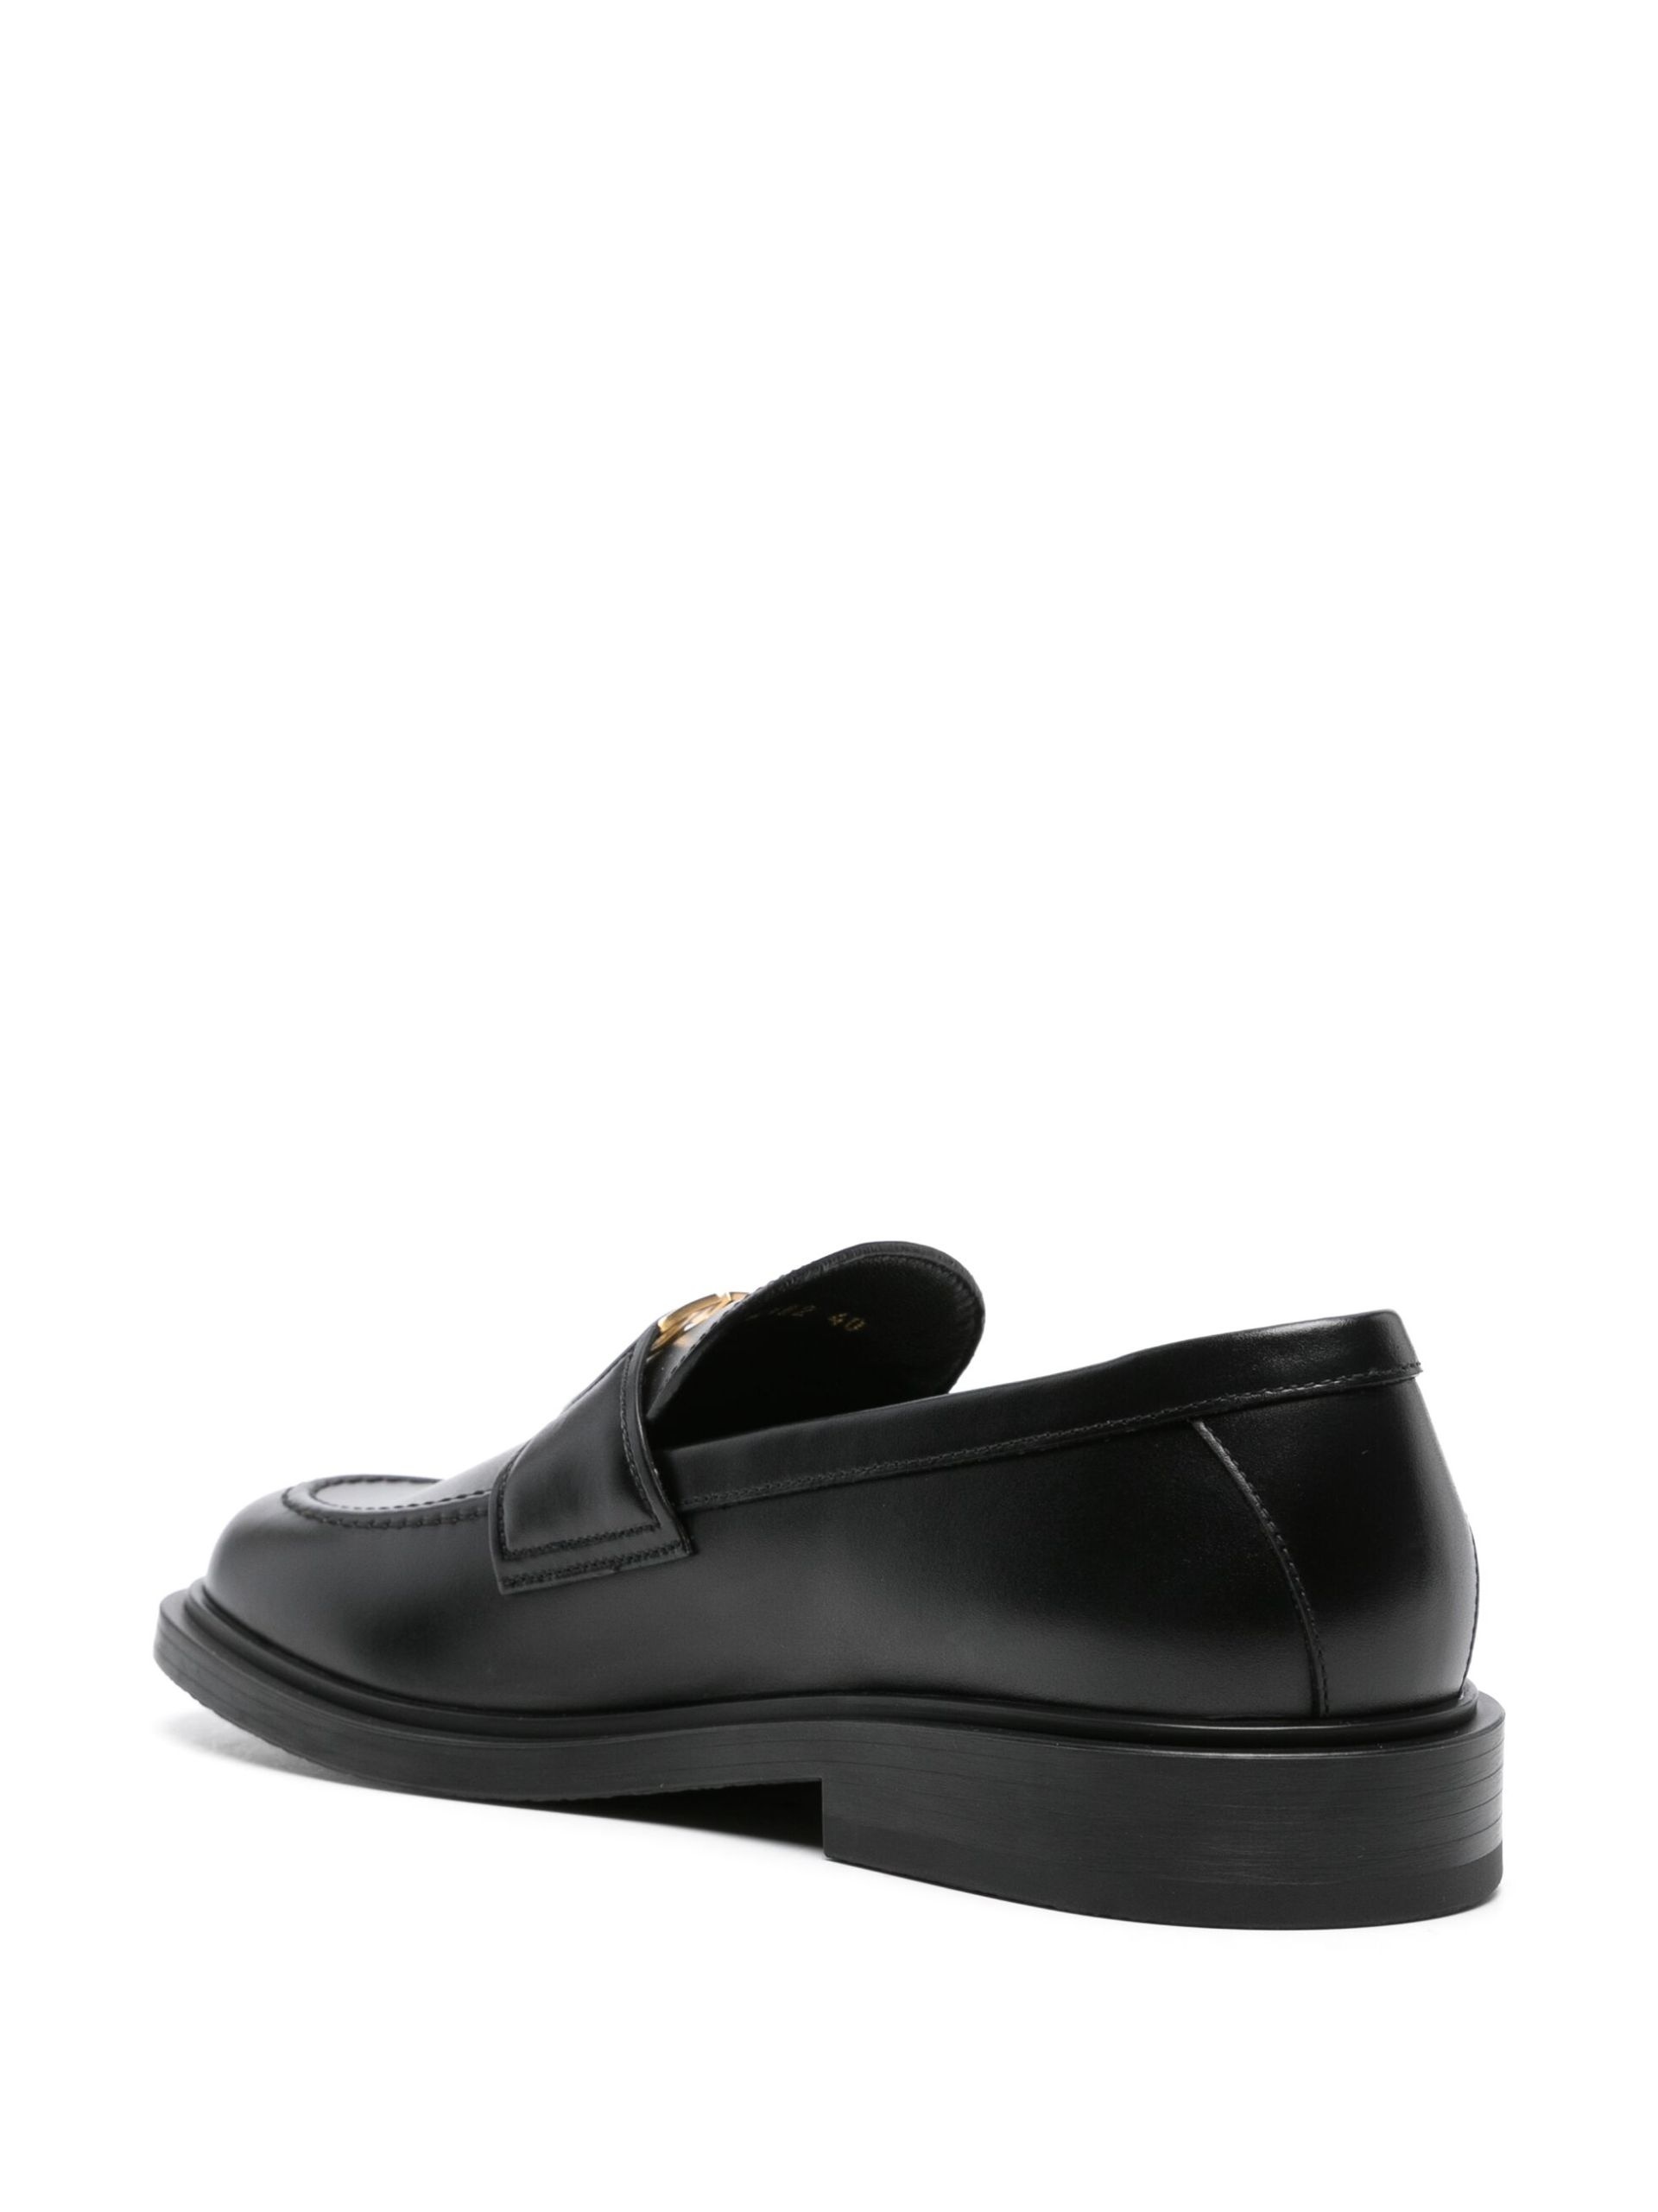 Black VLogo Leather Loafers - 3